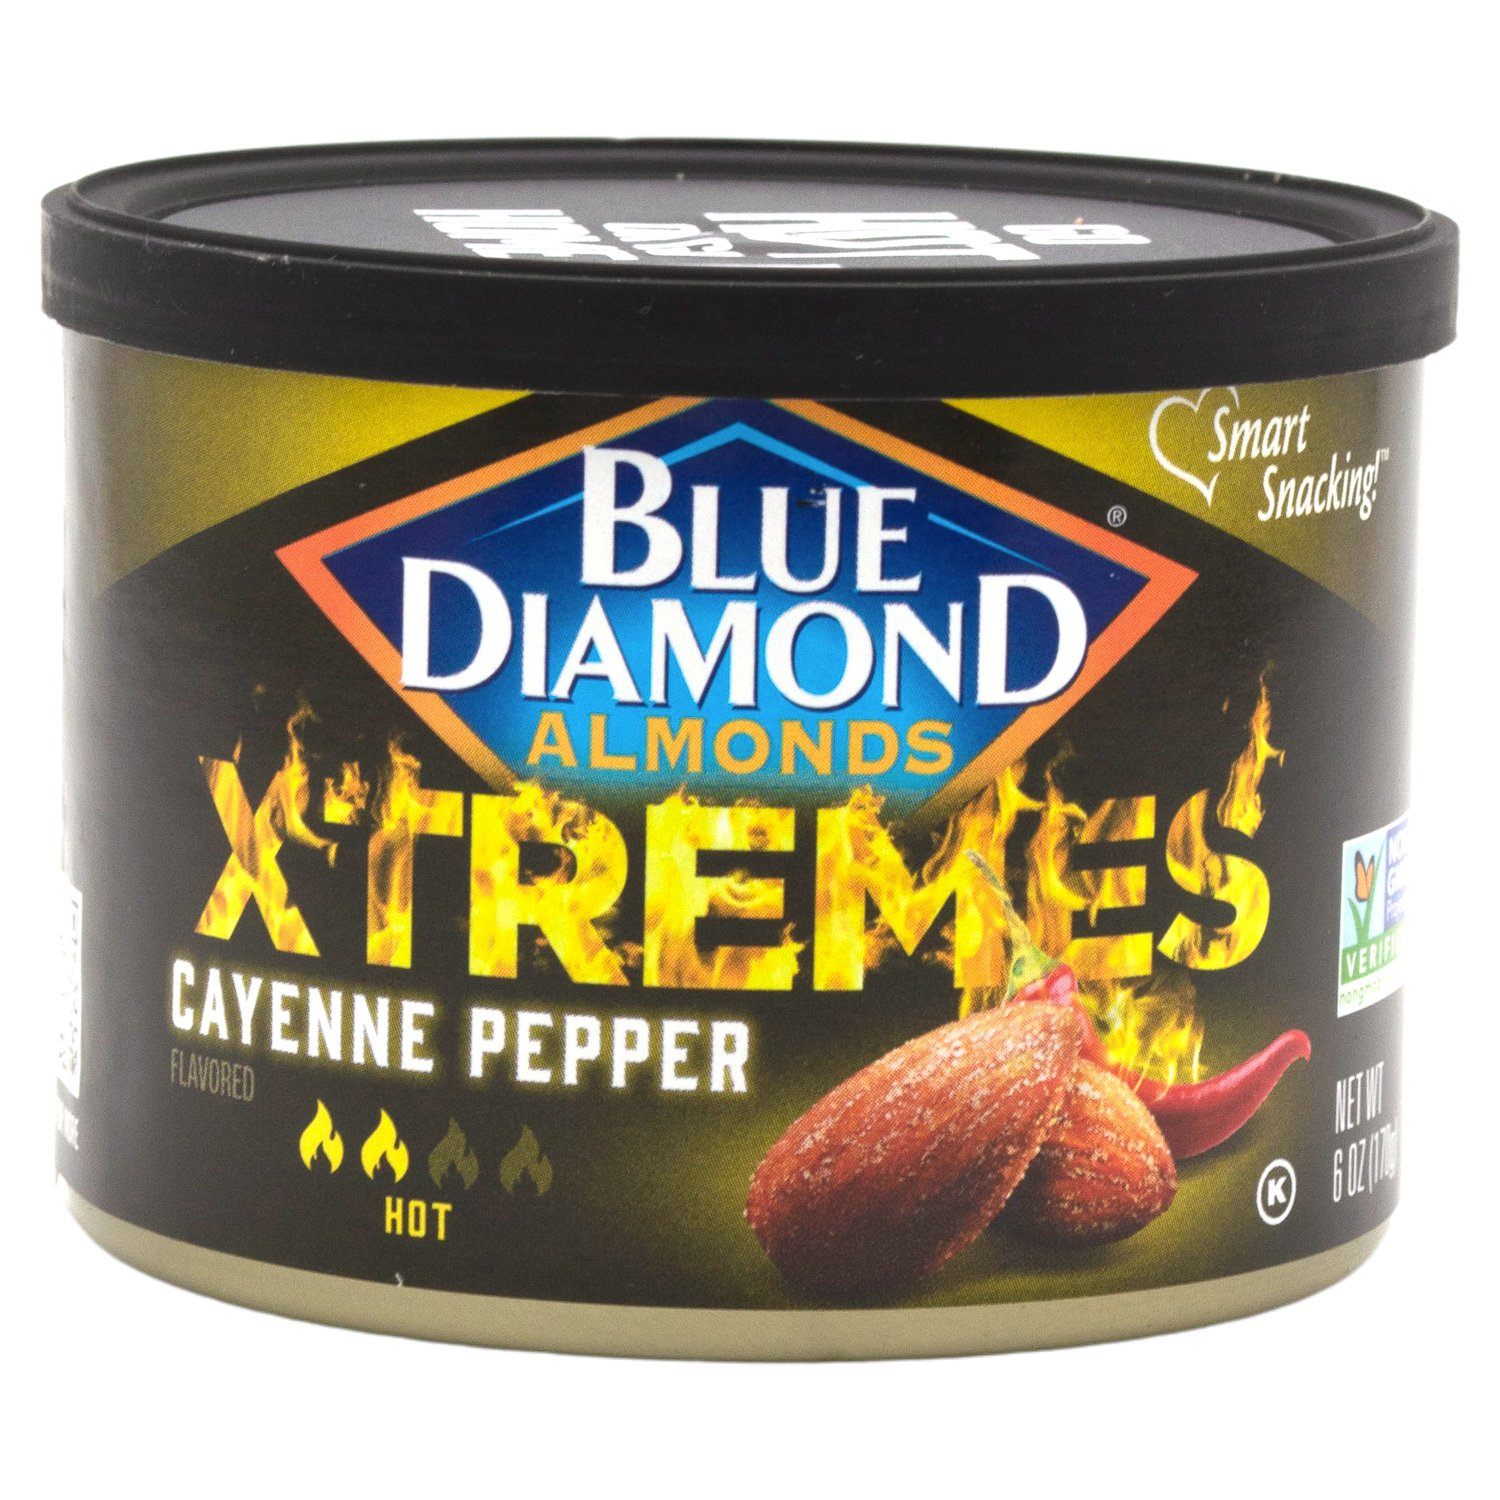 Blue Diamond Almonds Xtremes Blue Diamond Almonds Cayenne Pepper 6 Ounce 